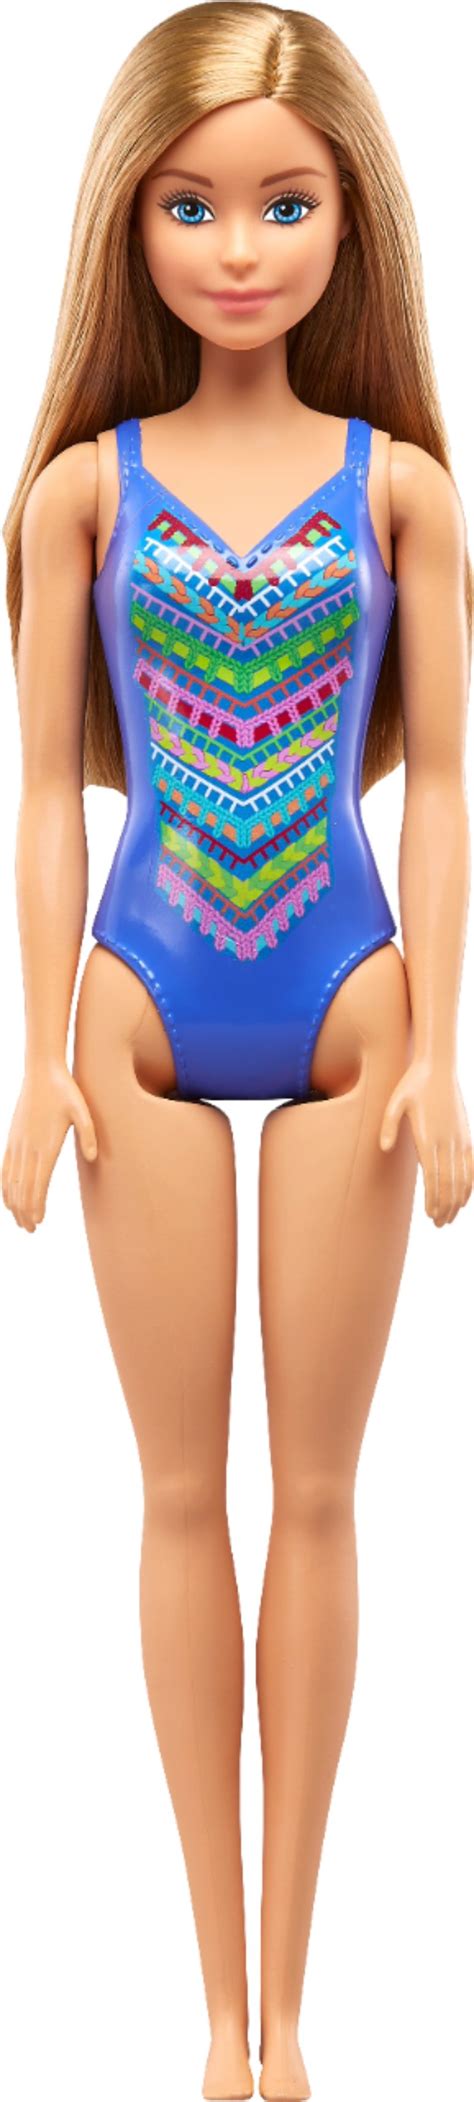 Barbie Beach Doll Lupon Gov Ph